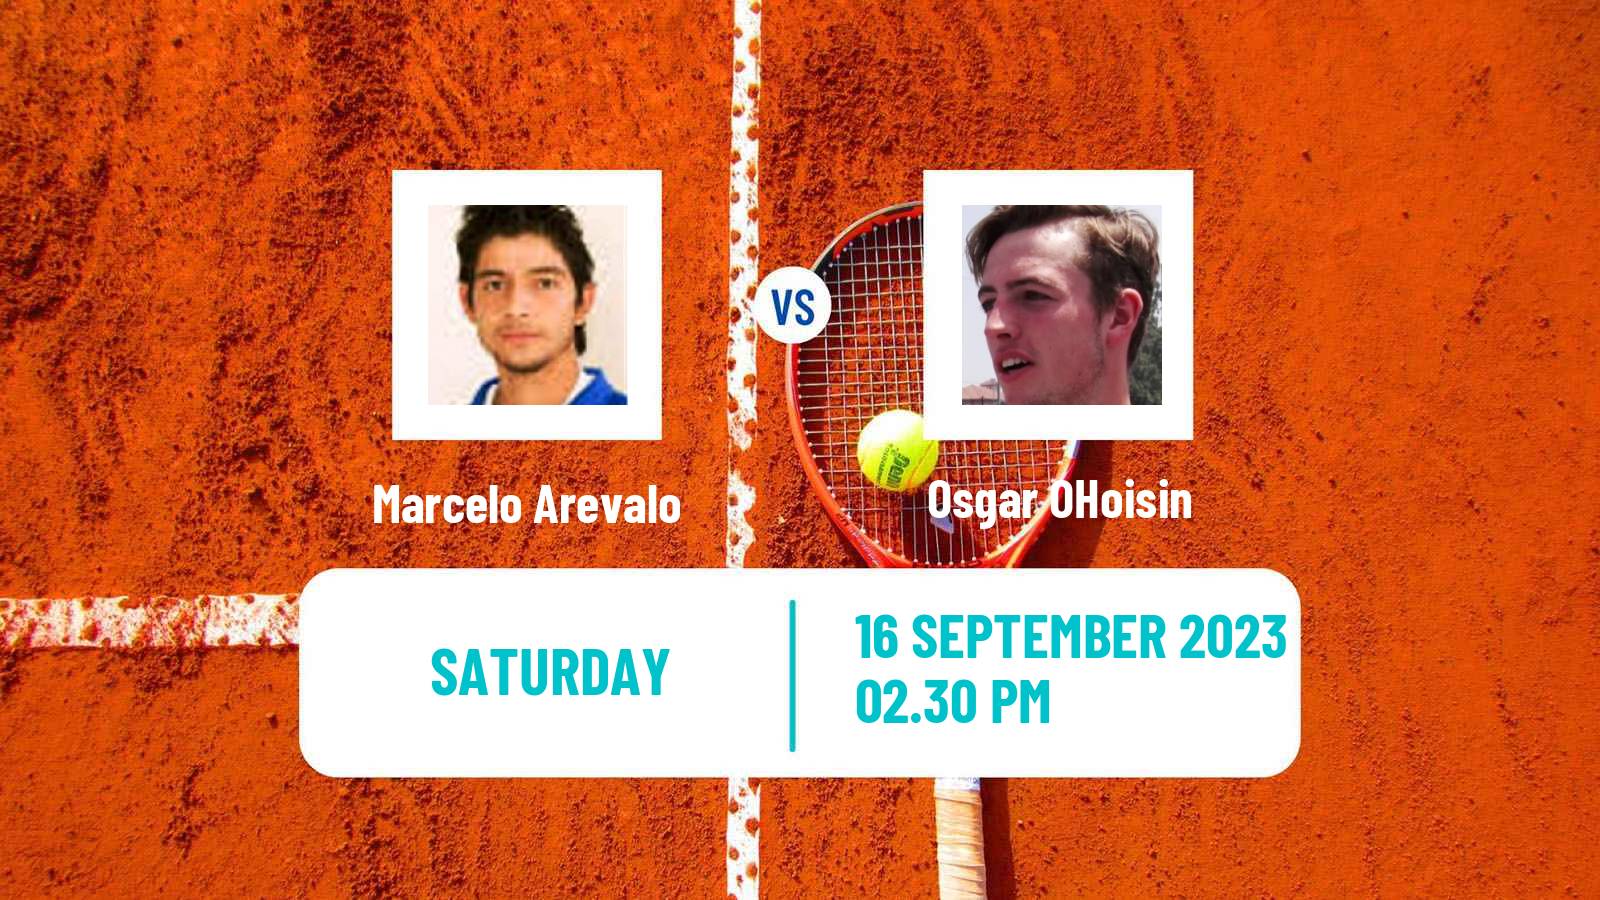 Tennis Davis Cup World Group II Marcelo Arevalo - Osgar OHoisin